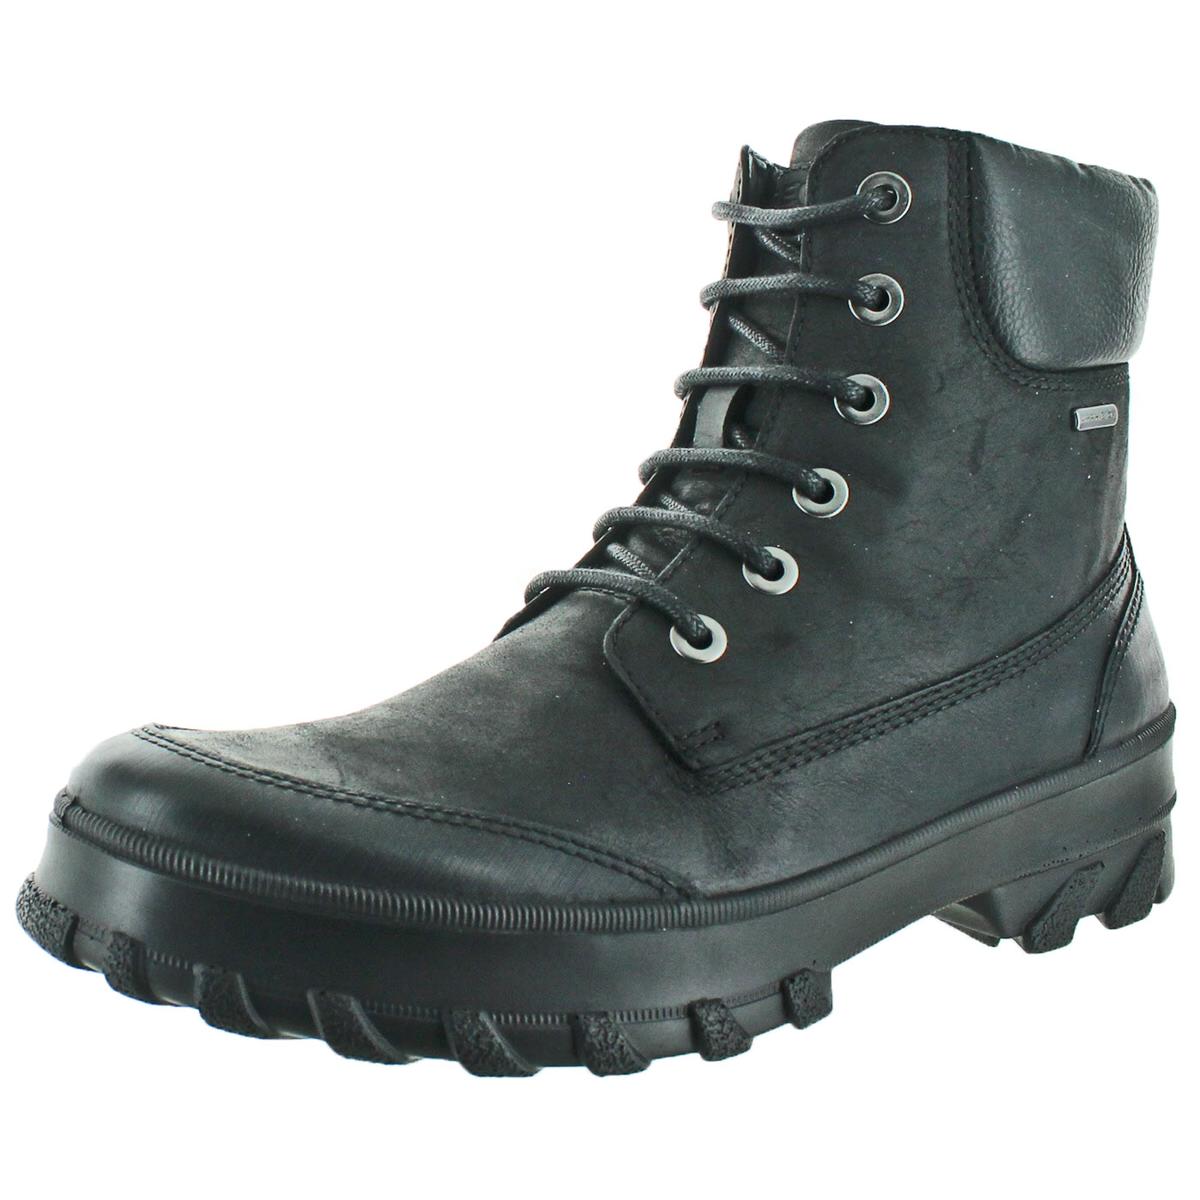 Geox Mens Yeti ABX Amphibiox Black Winter Boots Shoes 7 Medium (D) BHFO ...